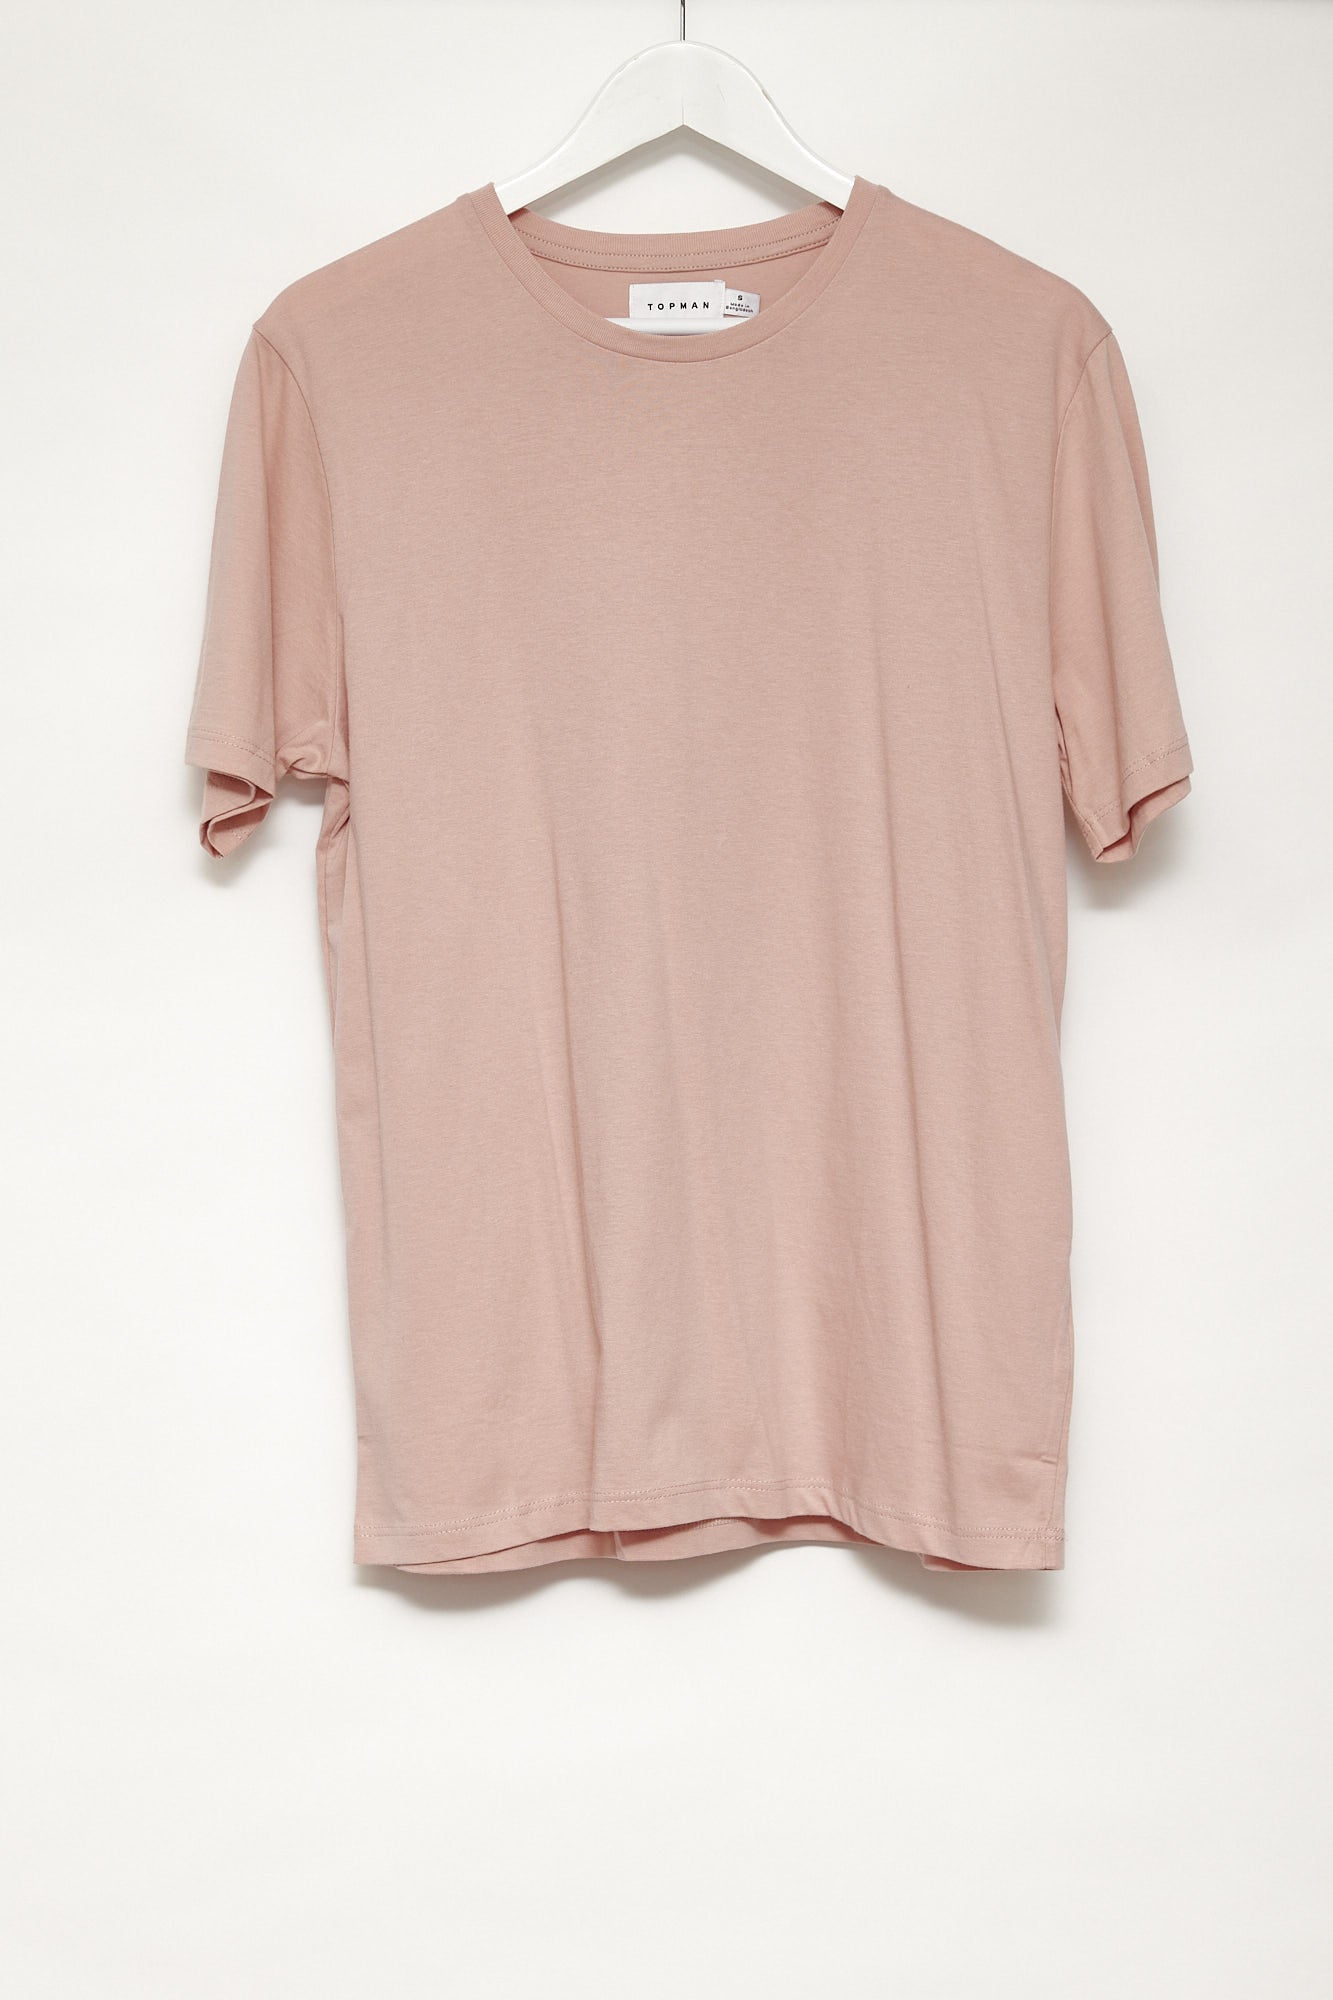 Mens Topman Pink T-shirt : Size Small